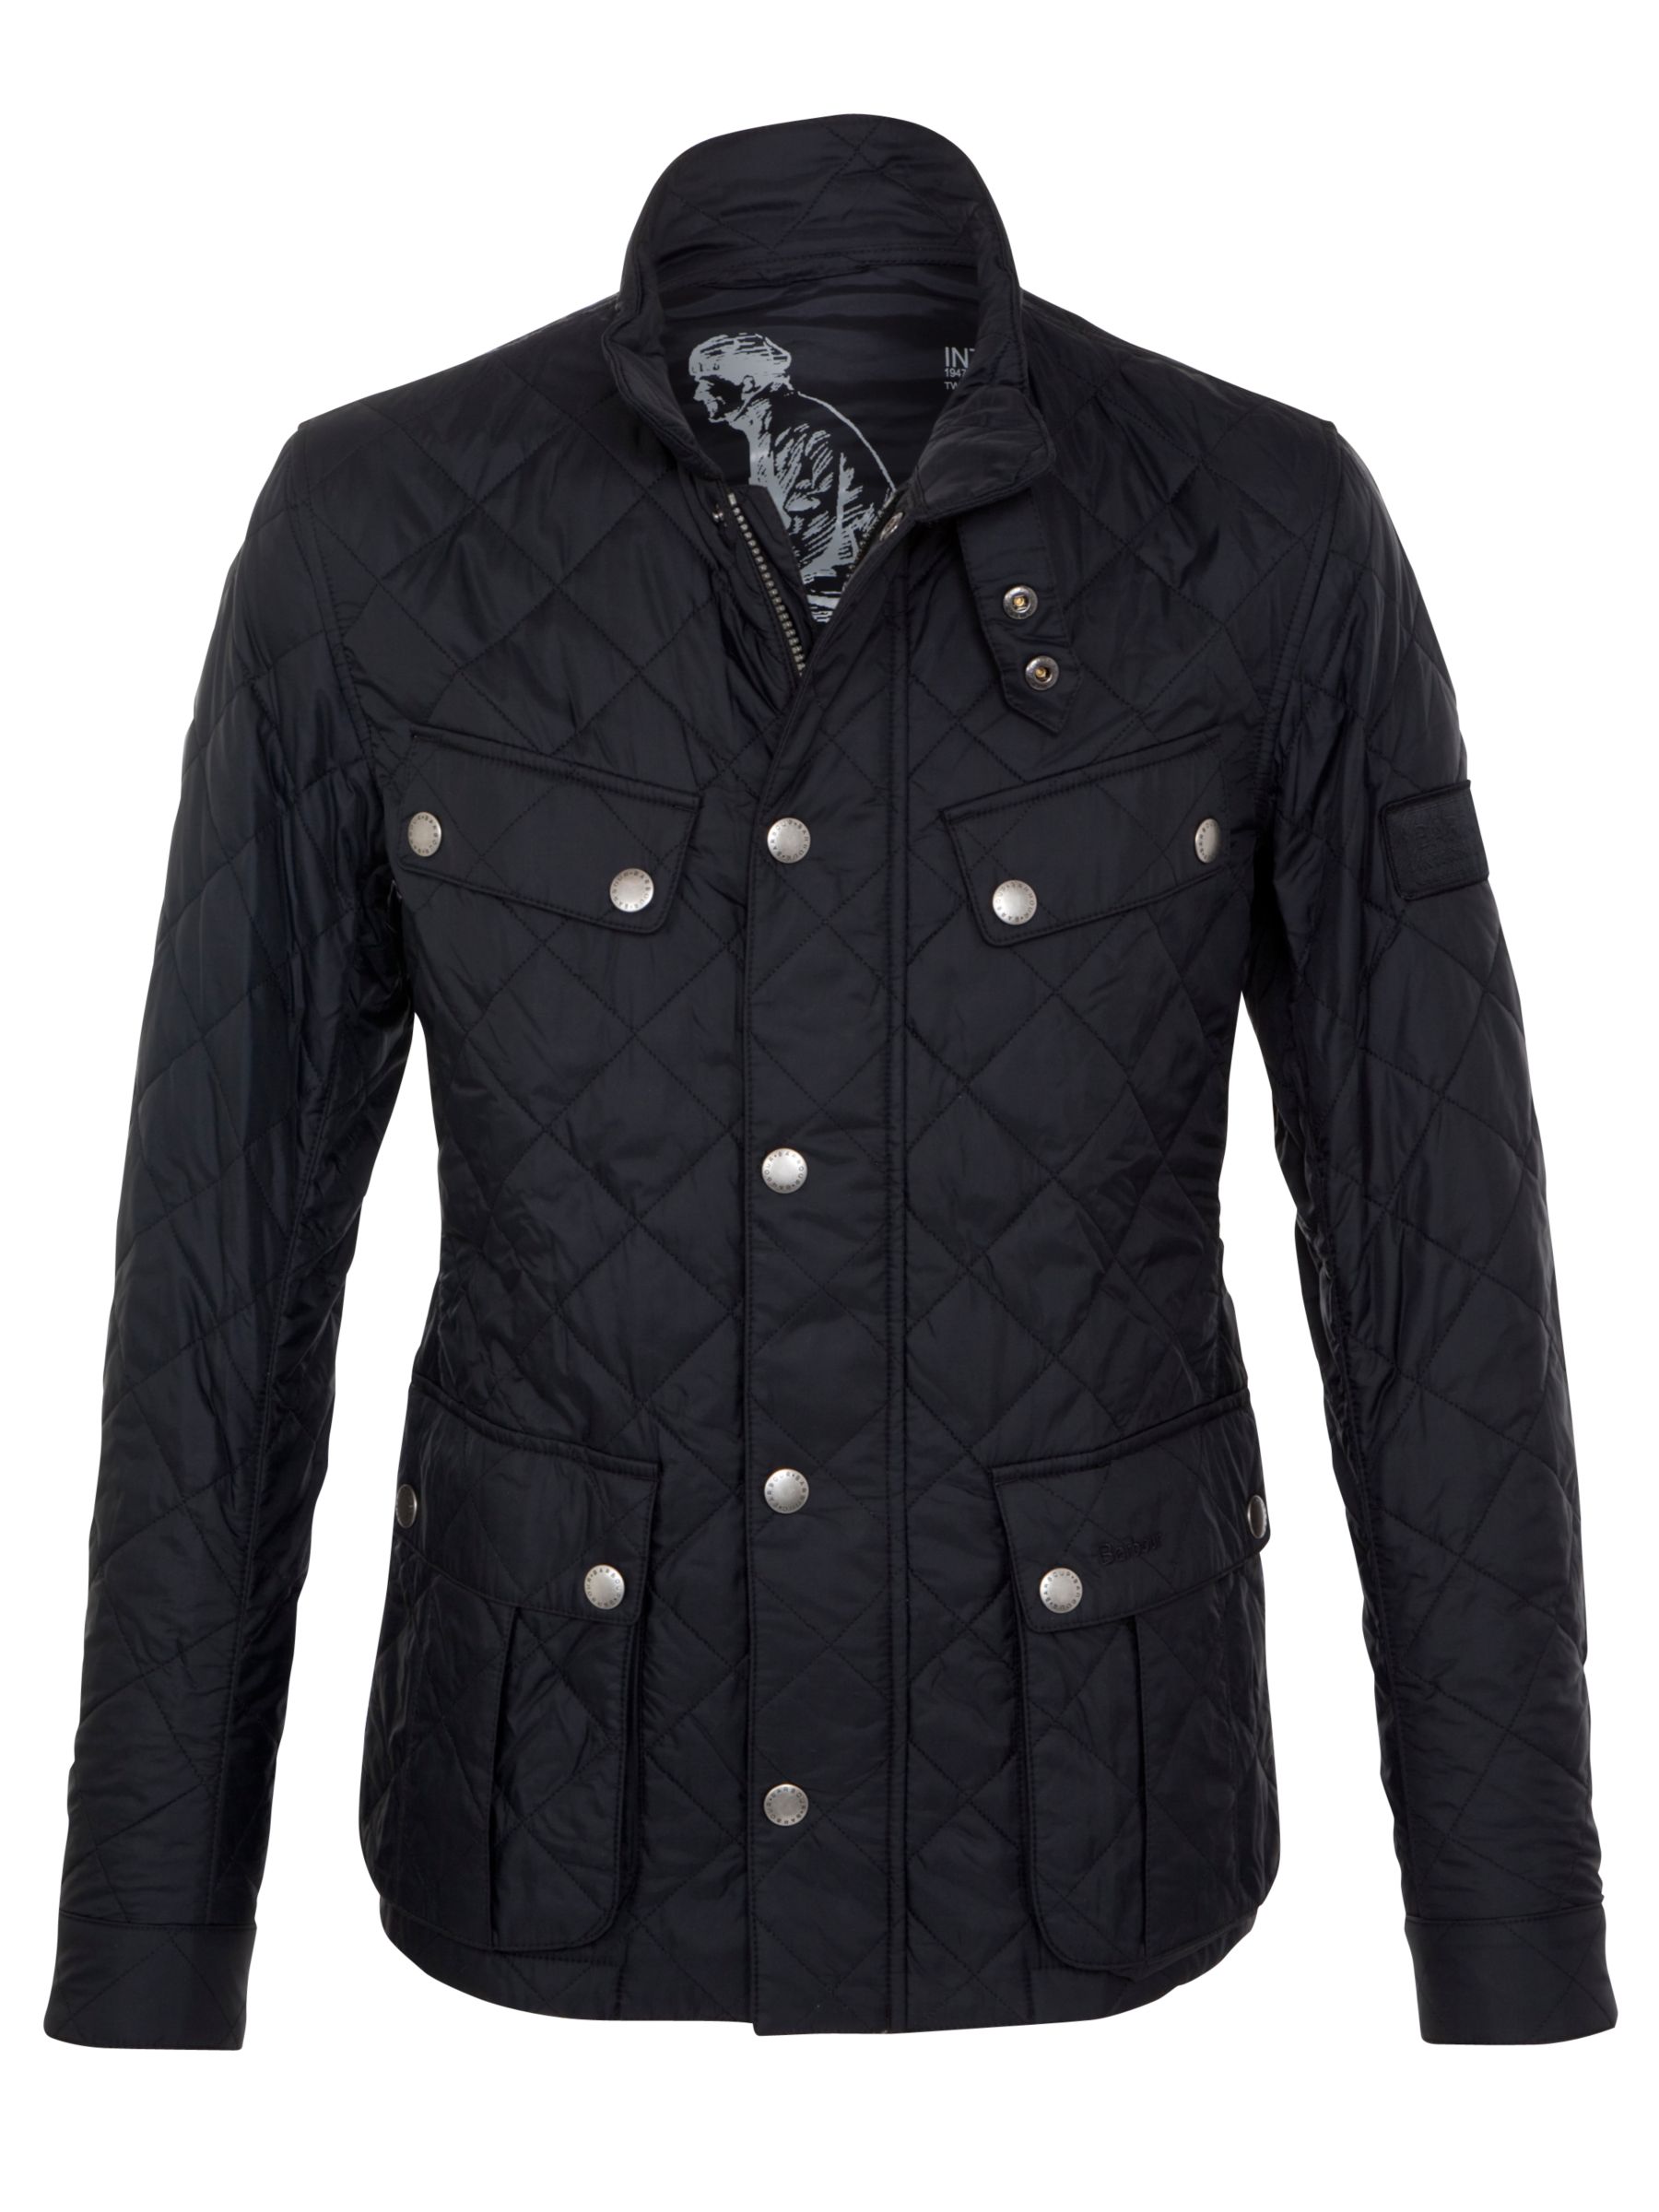 Barbour International Ariel Quilted Jacket, Black